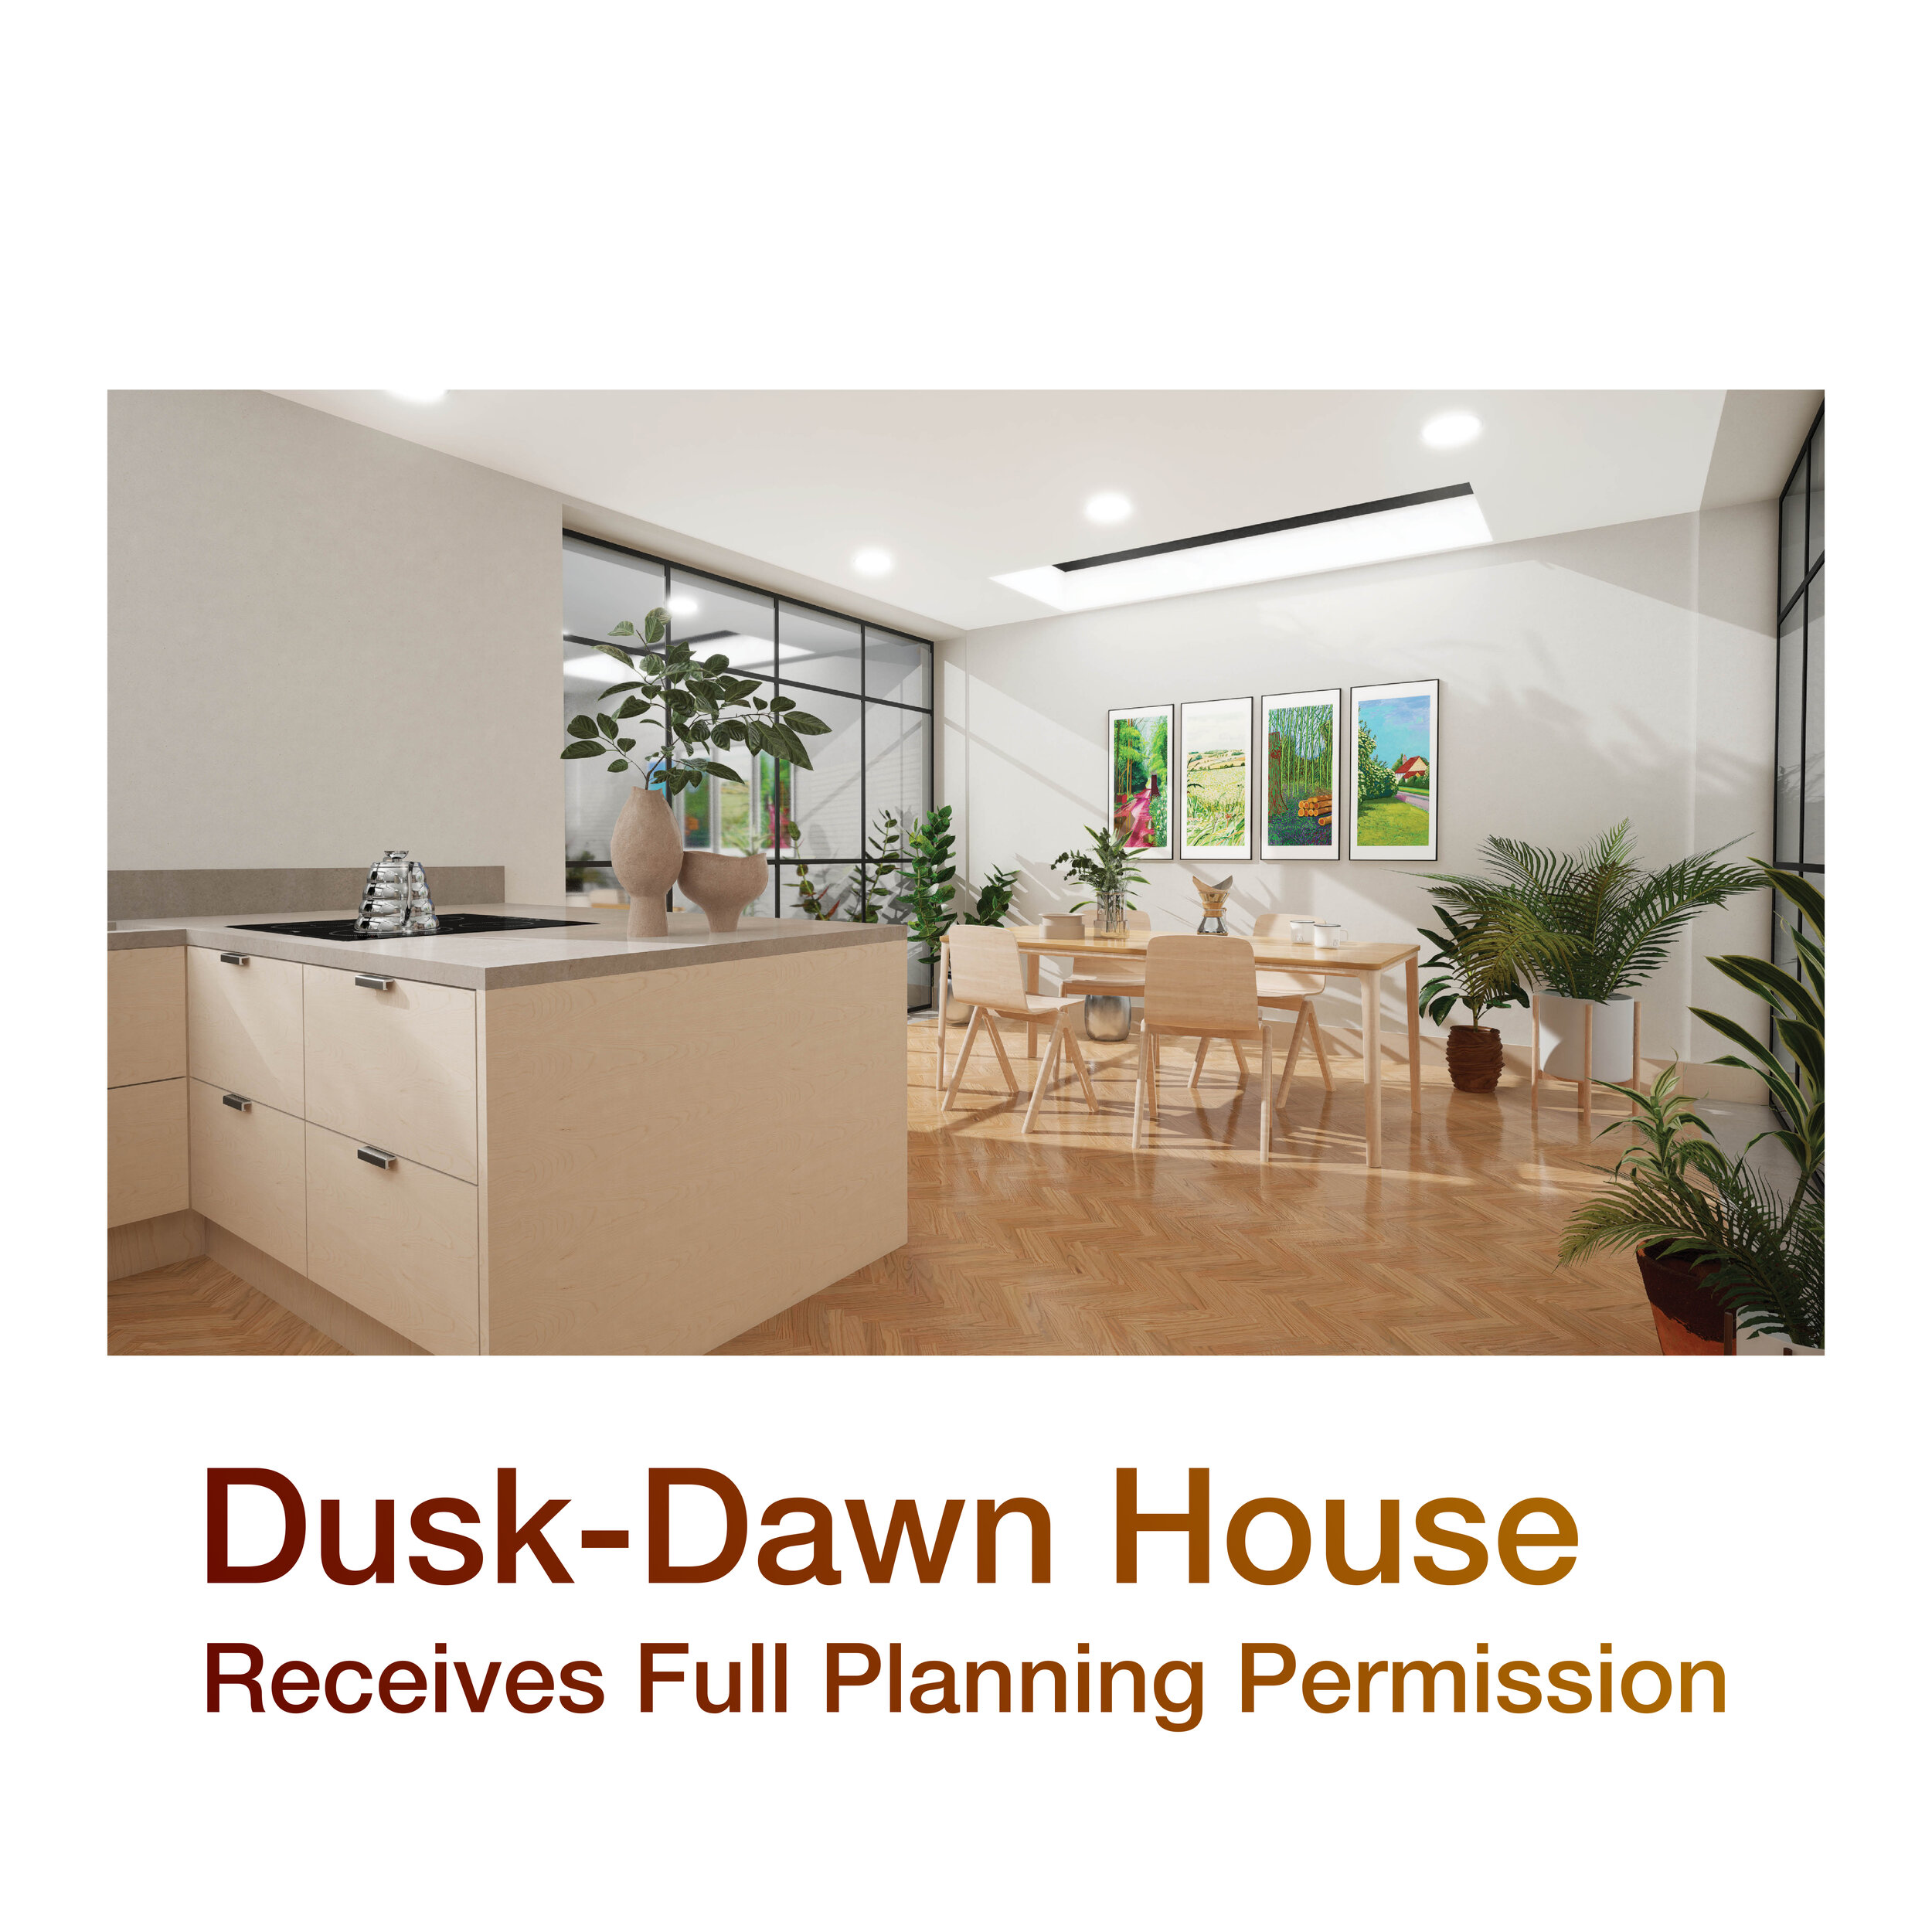 Dusk-Dawn House 5_Receives Full Planning Permission_Sustainable Cottingham Architects_Samuel Kendall Associates